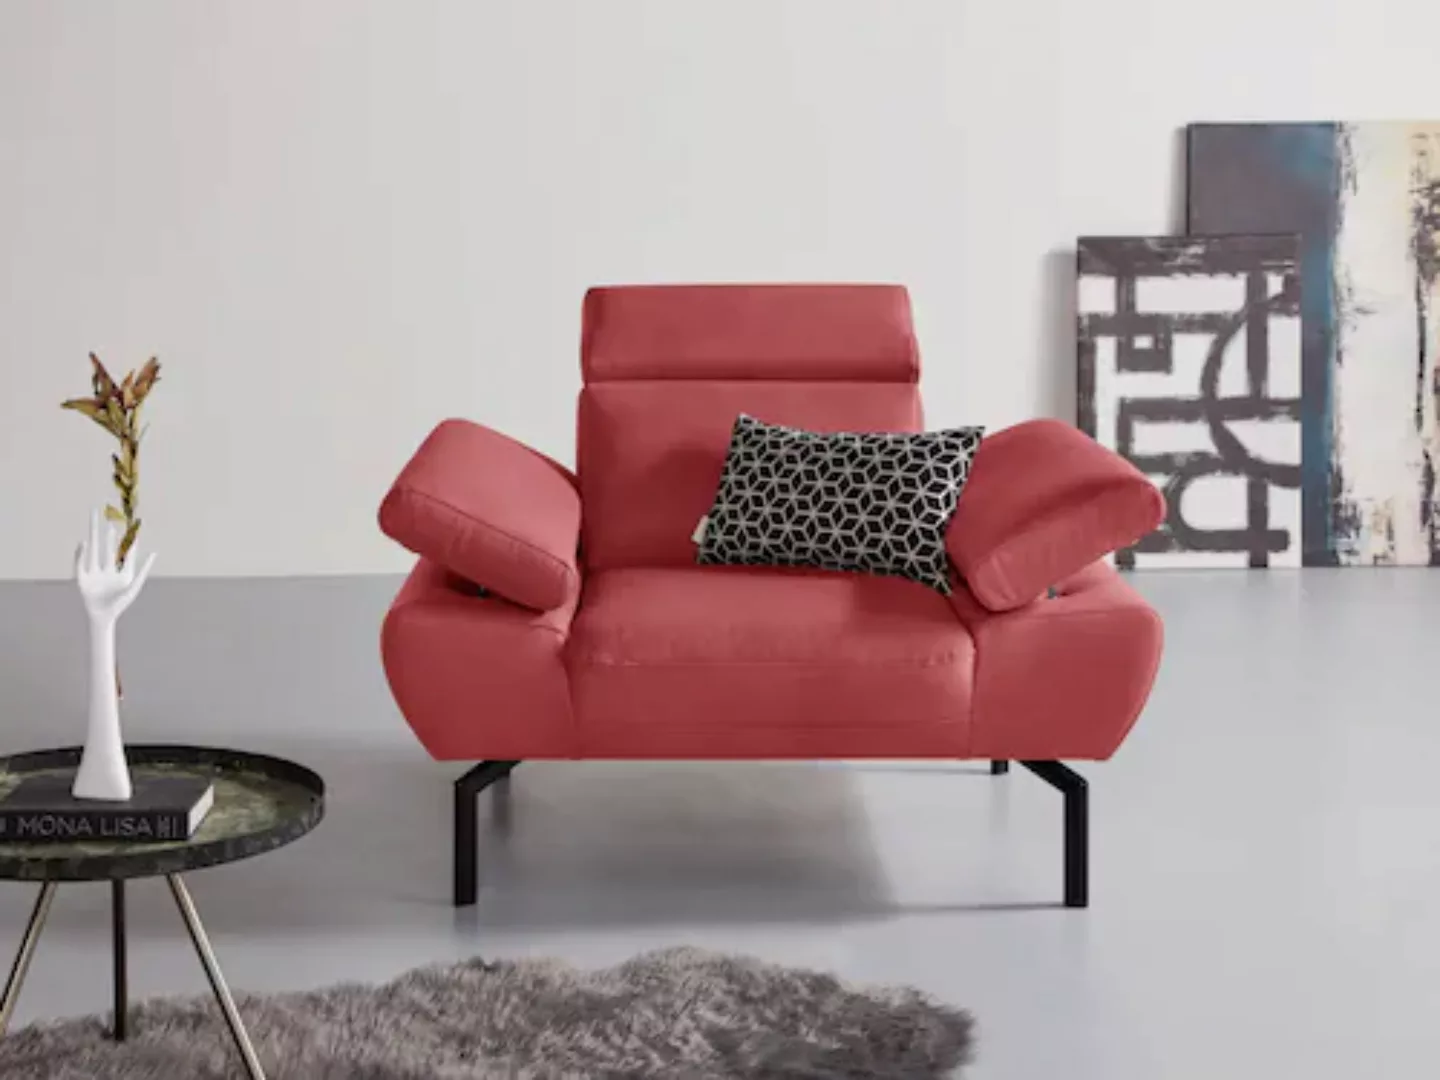 Places of Style Sessel »Trapino Luxus« günstig online kaufen